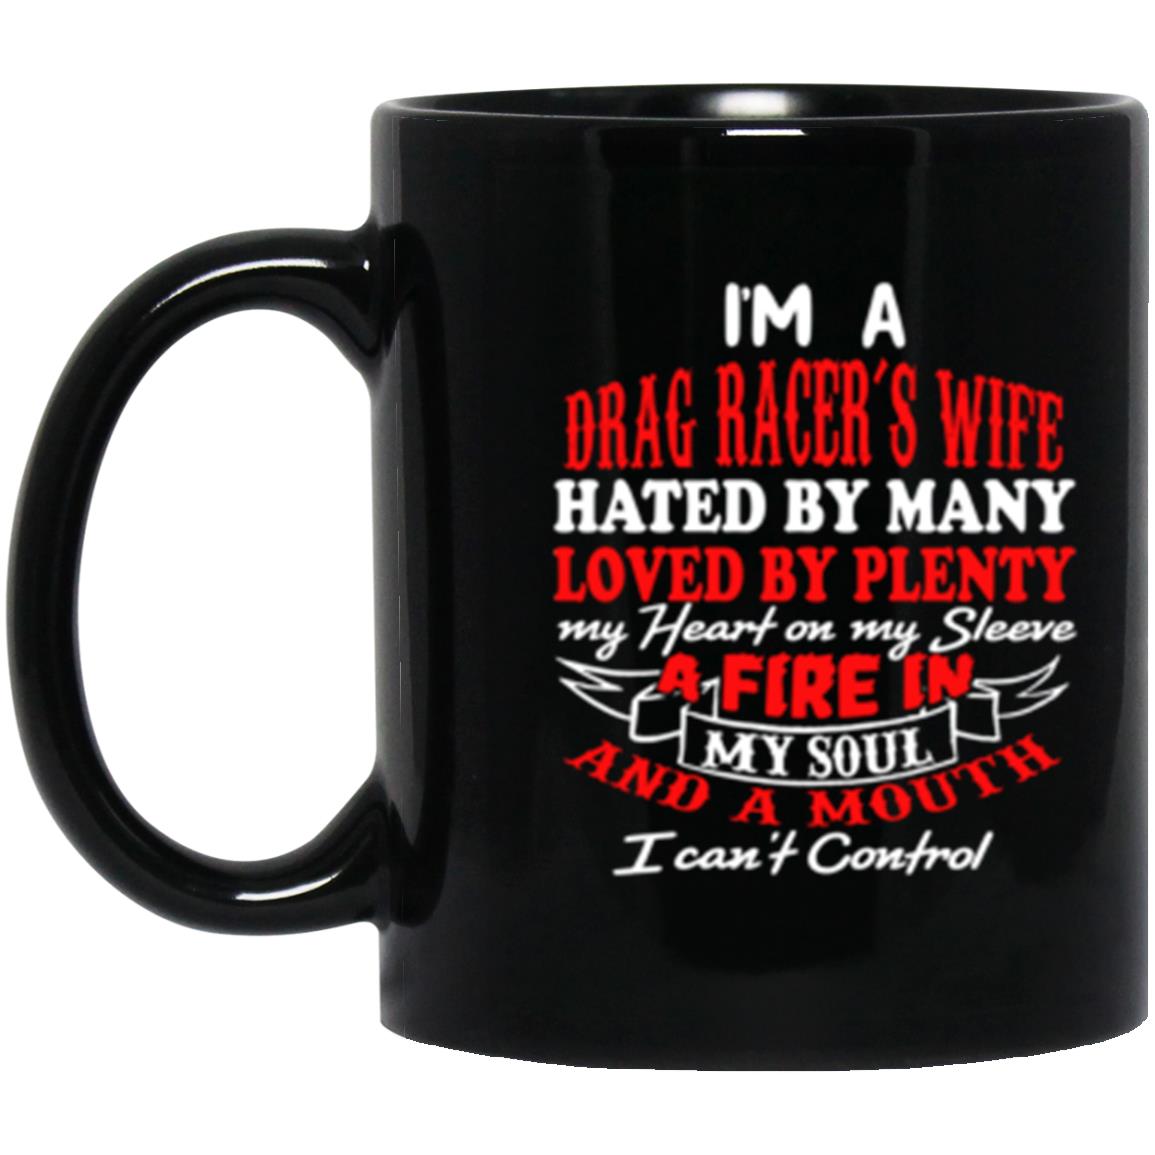 I'm A Drag Racer's Wife Hated By Many Loved By Plenty 11 oz. Black Mug